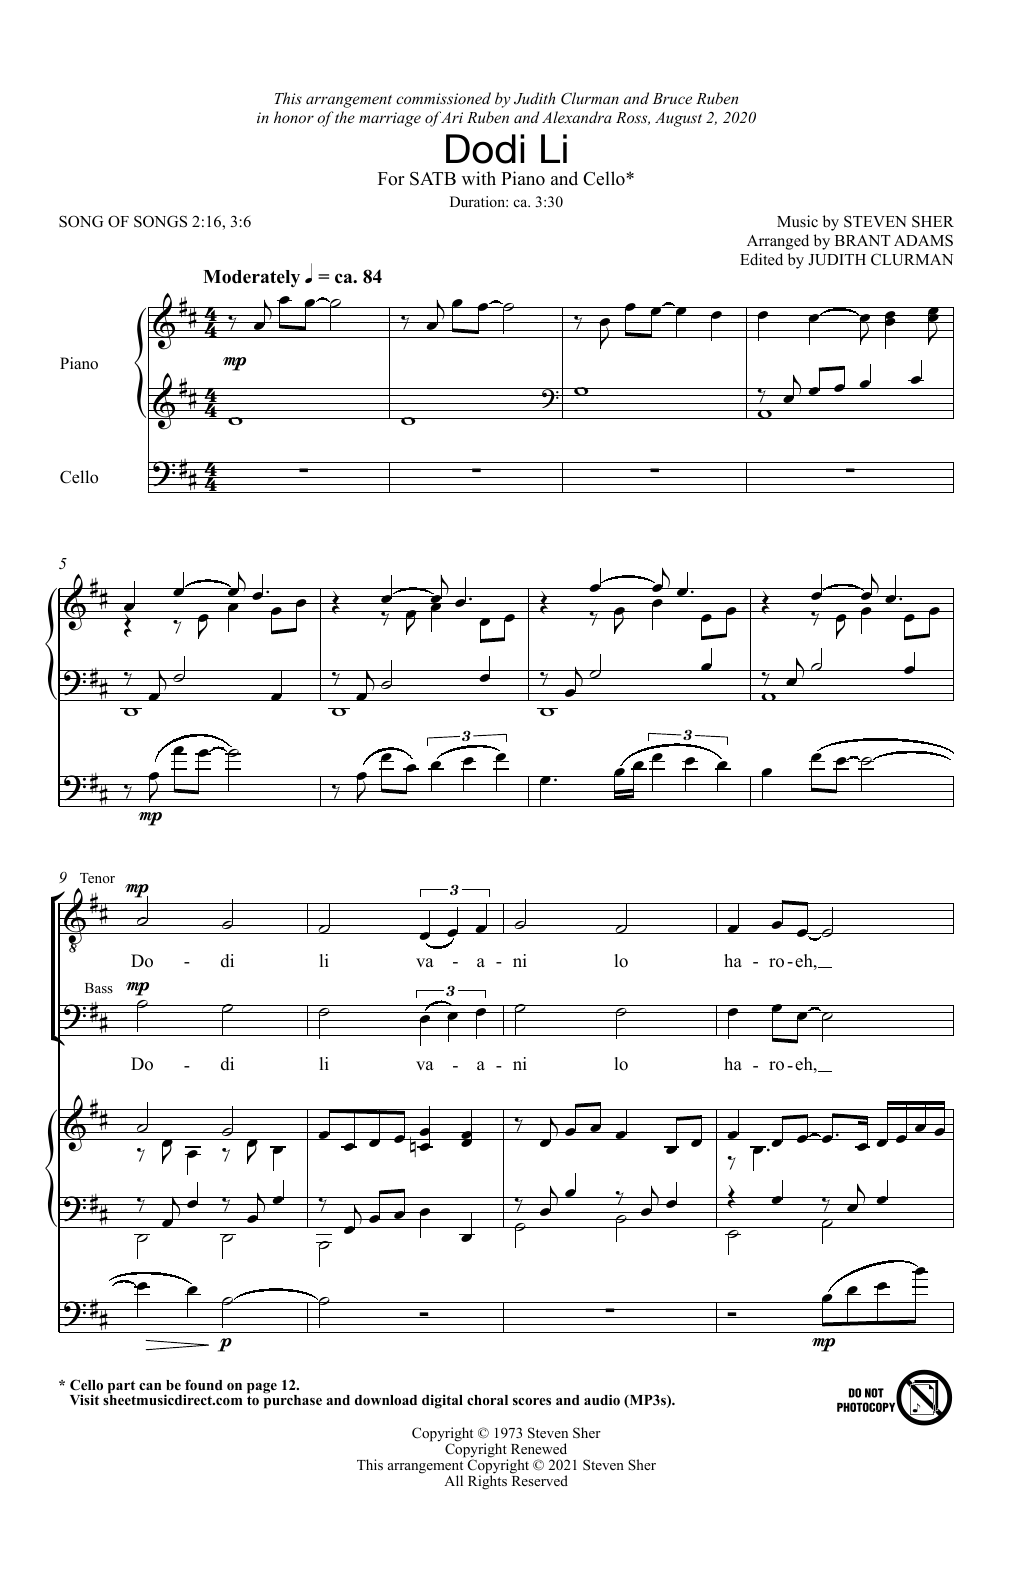 Steven Sher Dodi Li (arr. Brant Adams) Sheet Music Notes & Chords for SSA Choir - Download or Print PDF